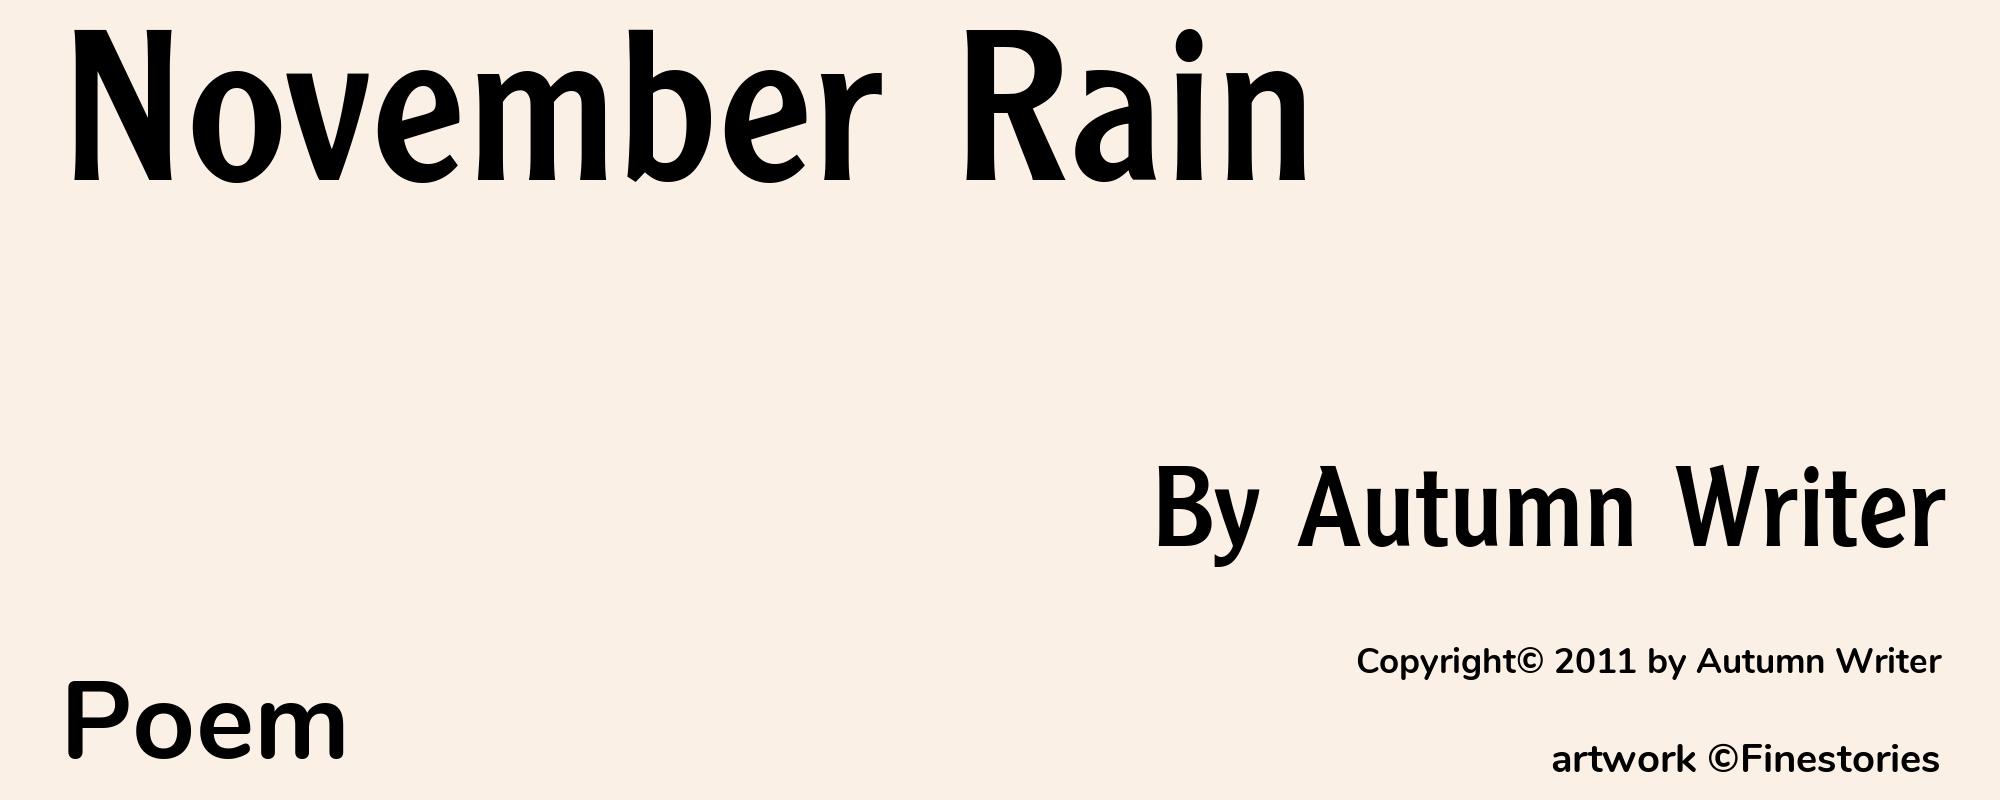 November Rain - Cover